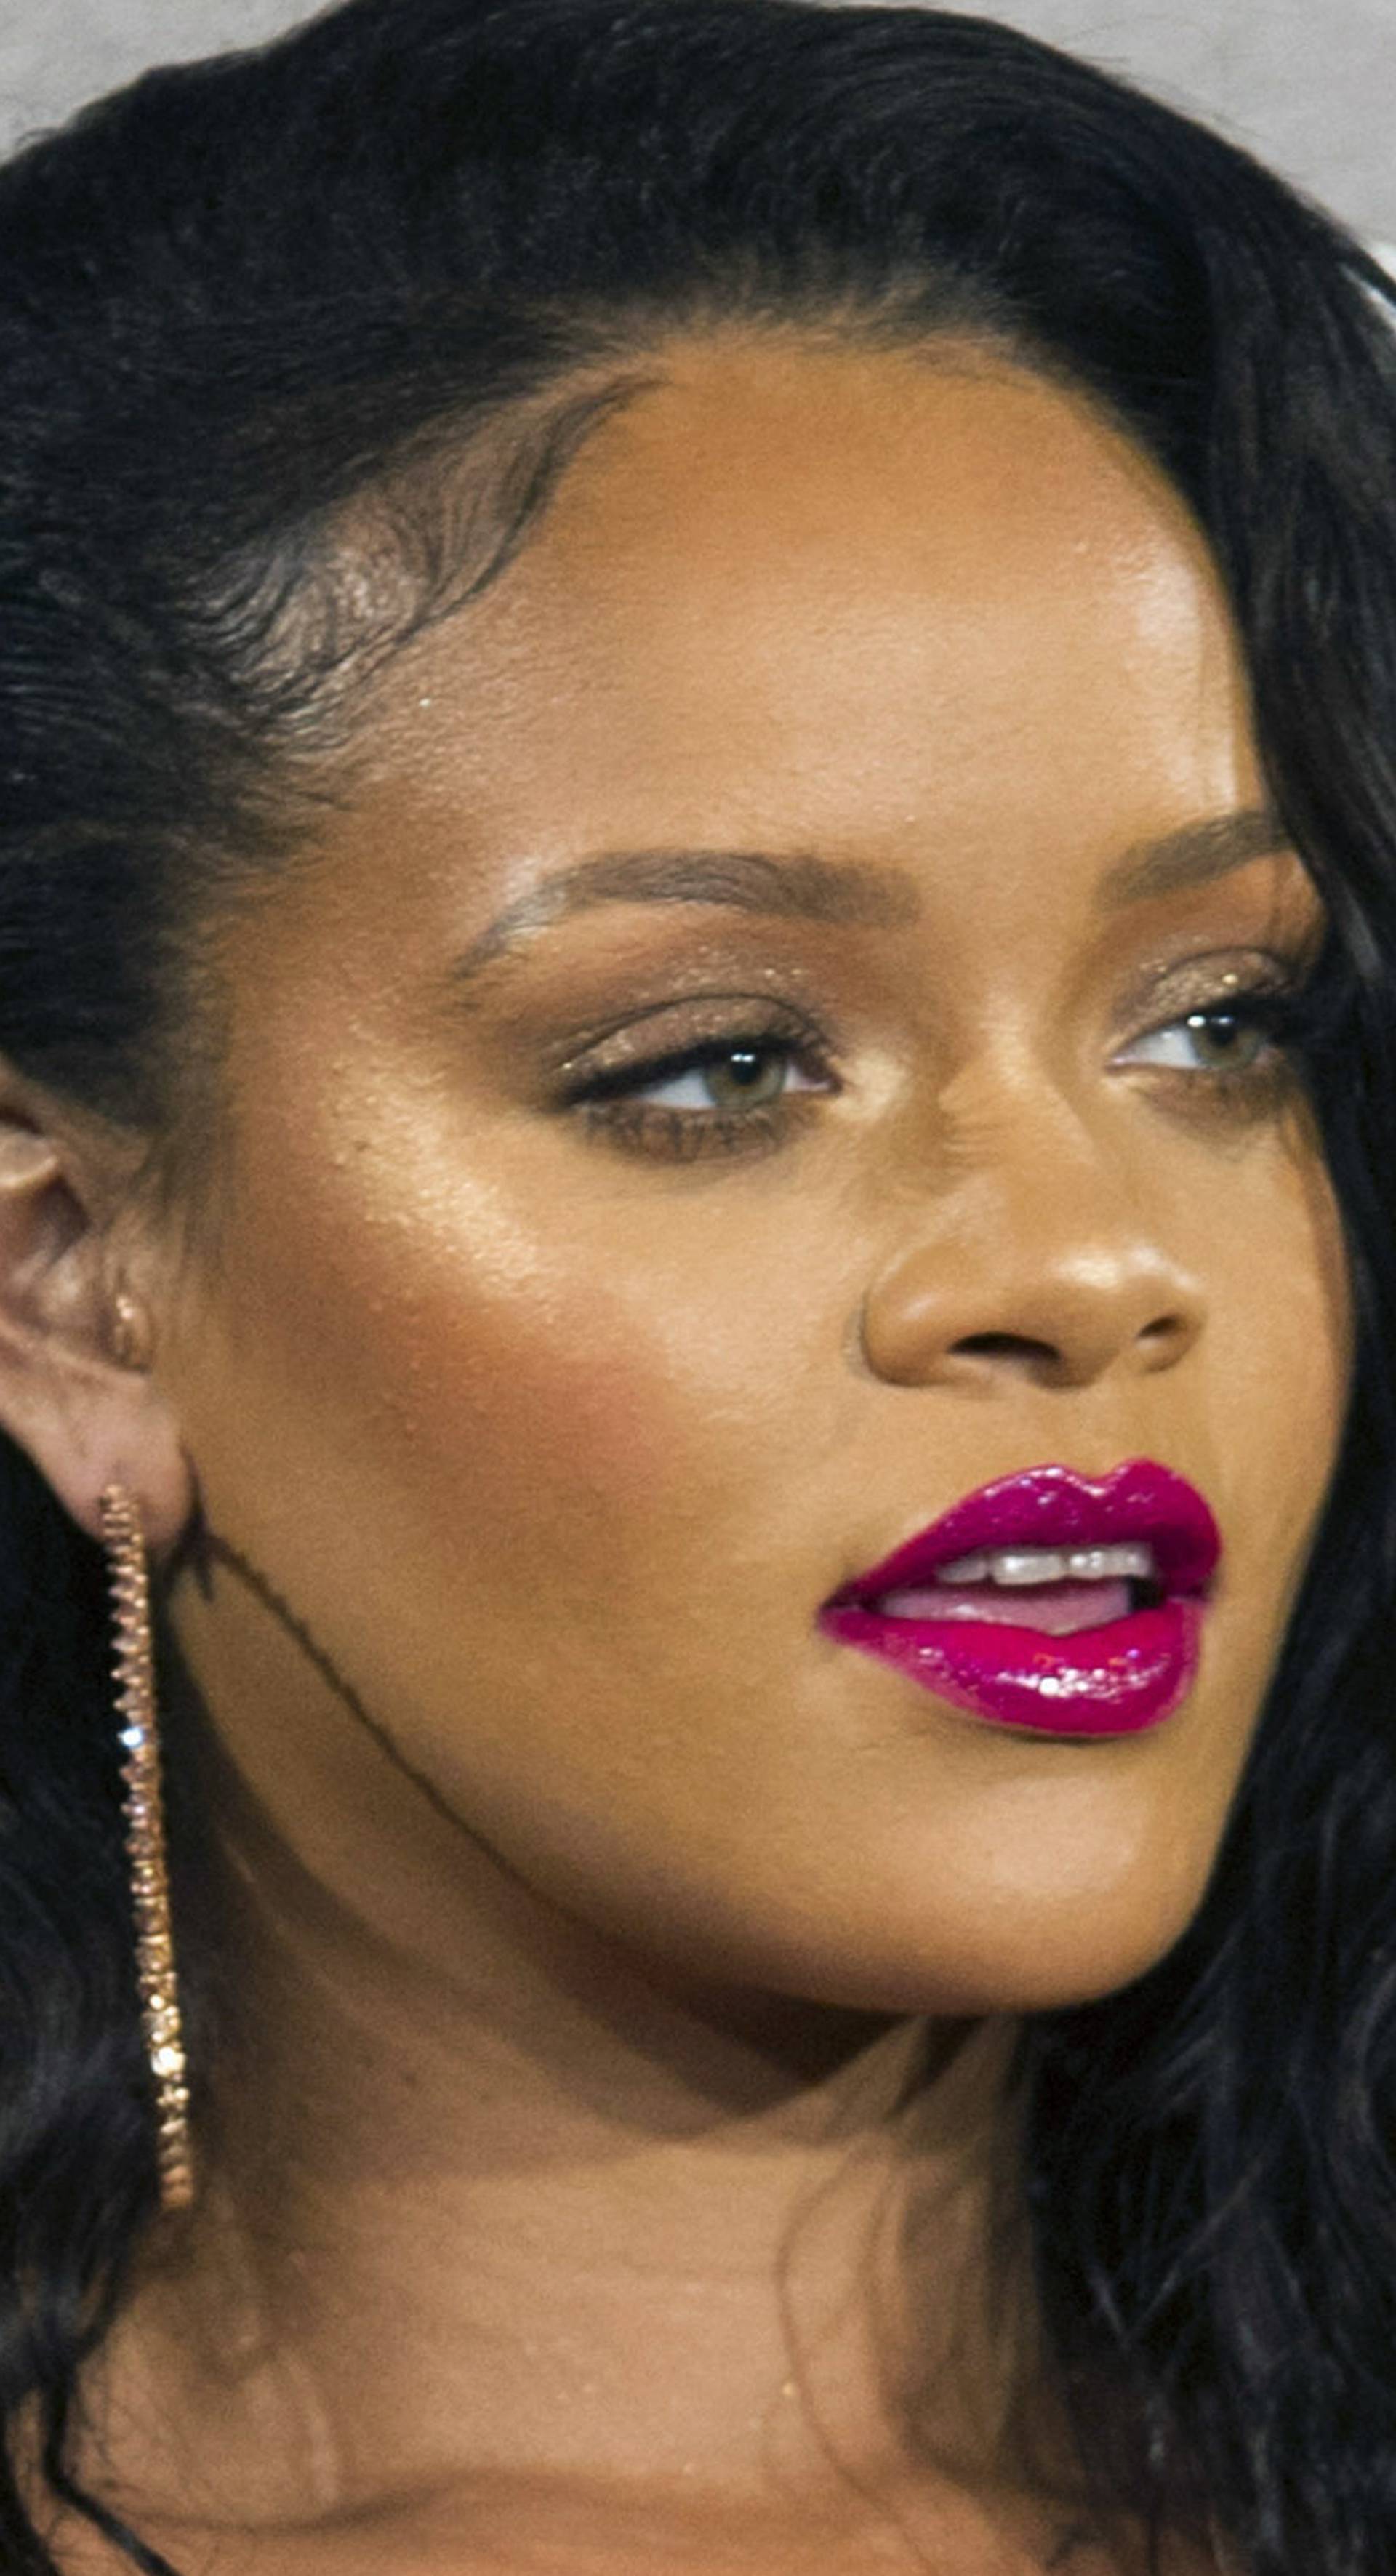 Rihanna Fenty Beauty Launch in Madrid